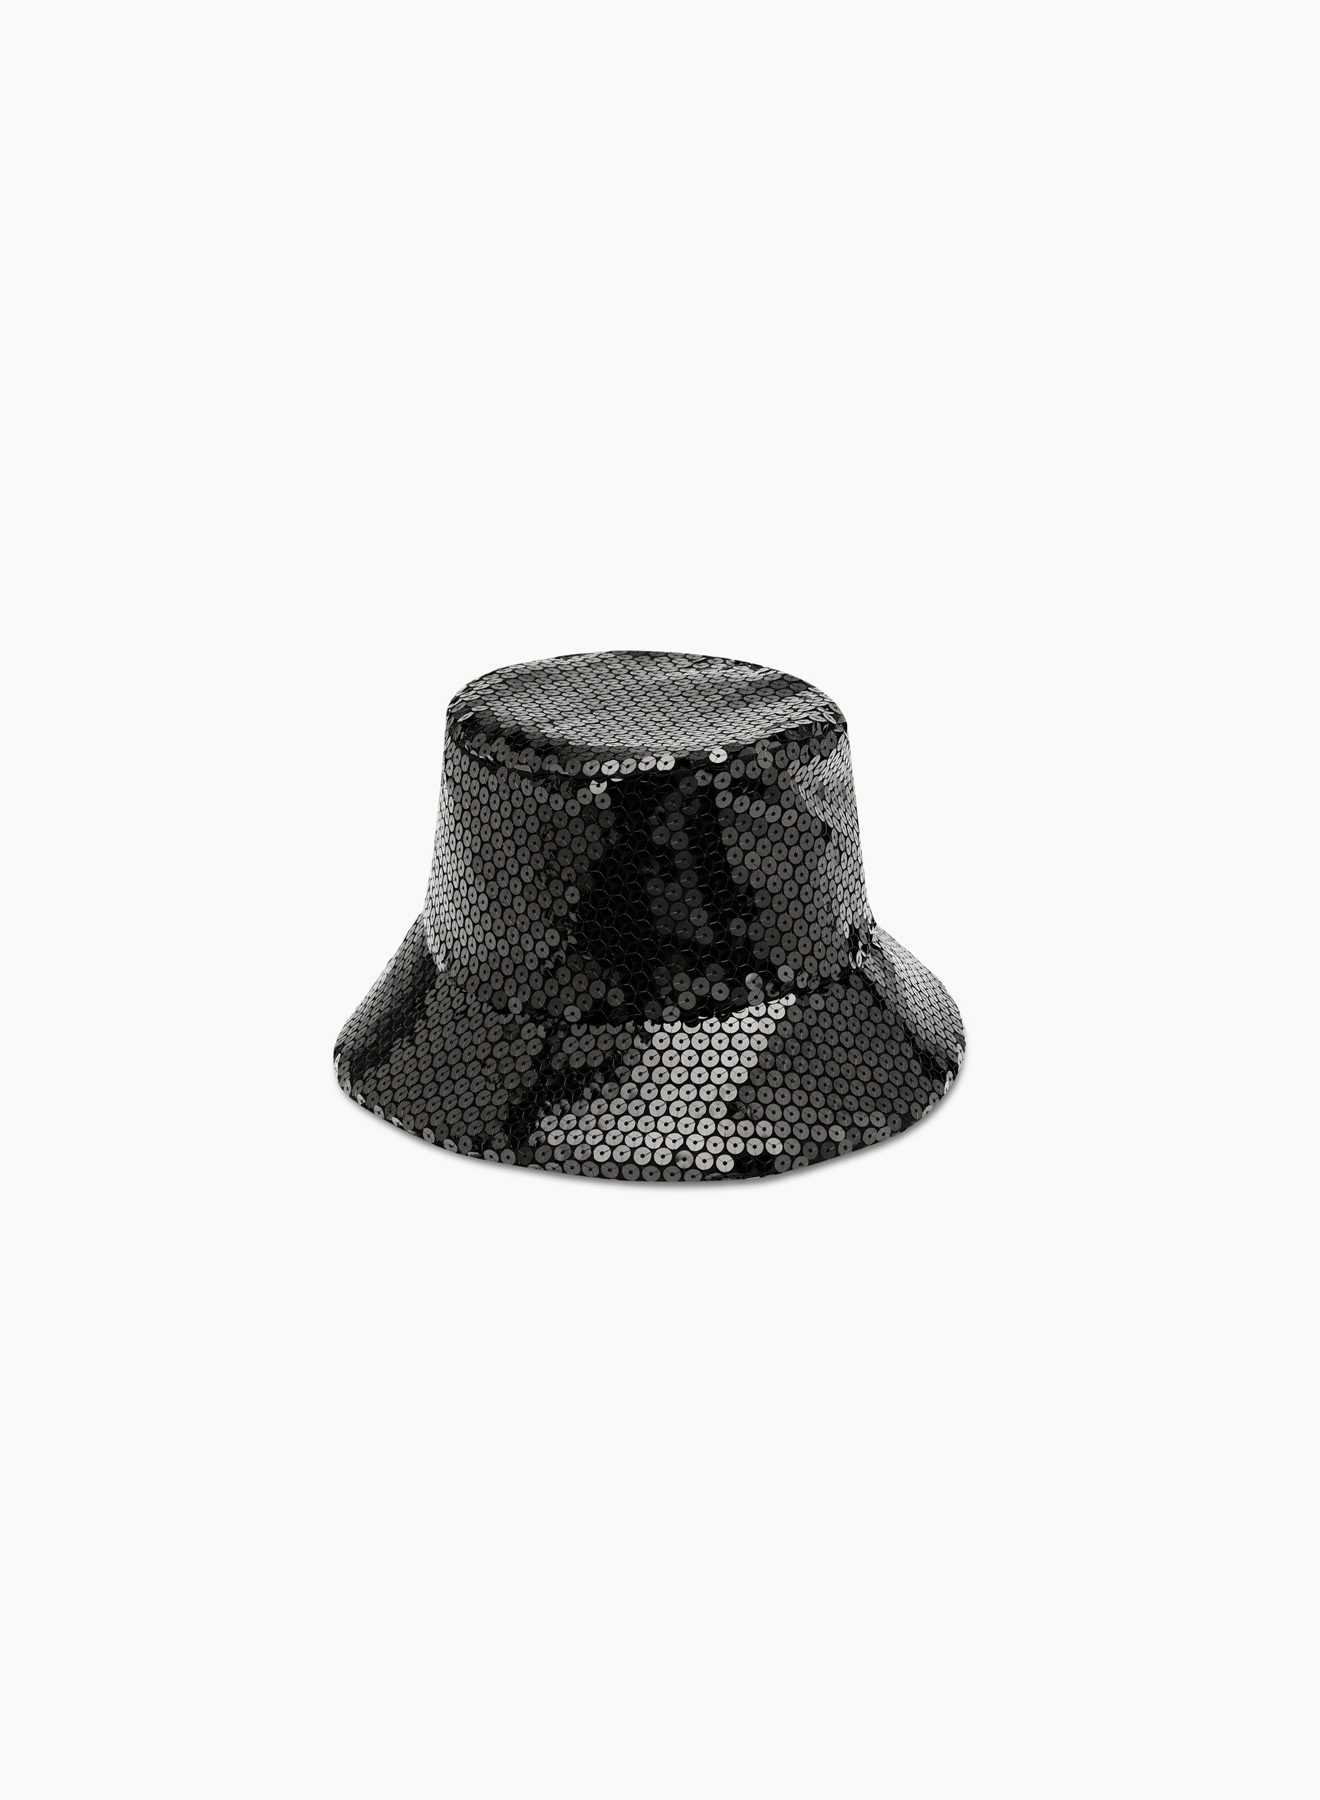 Sequin Black Bucket Hat - Nina Ricci 